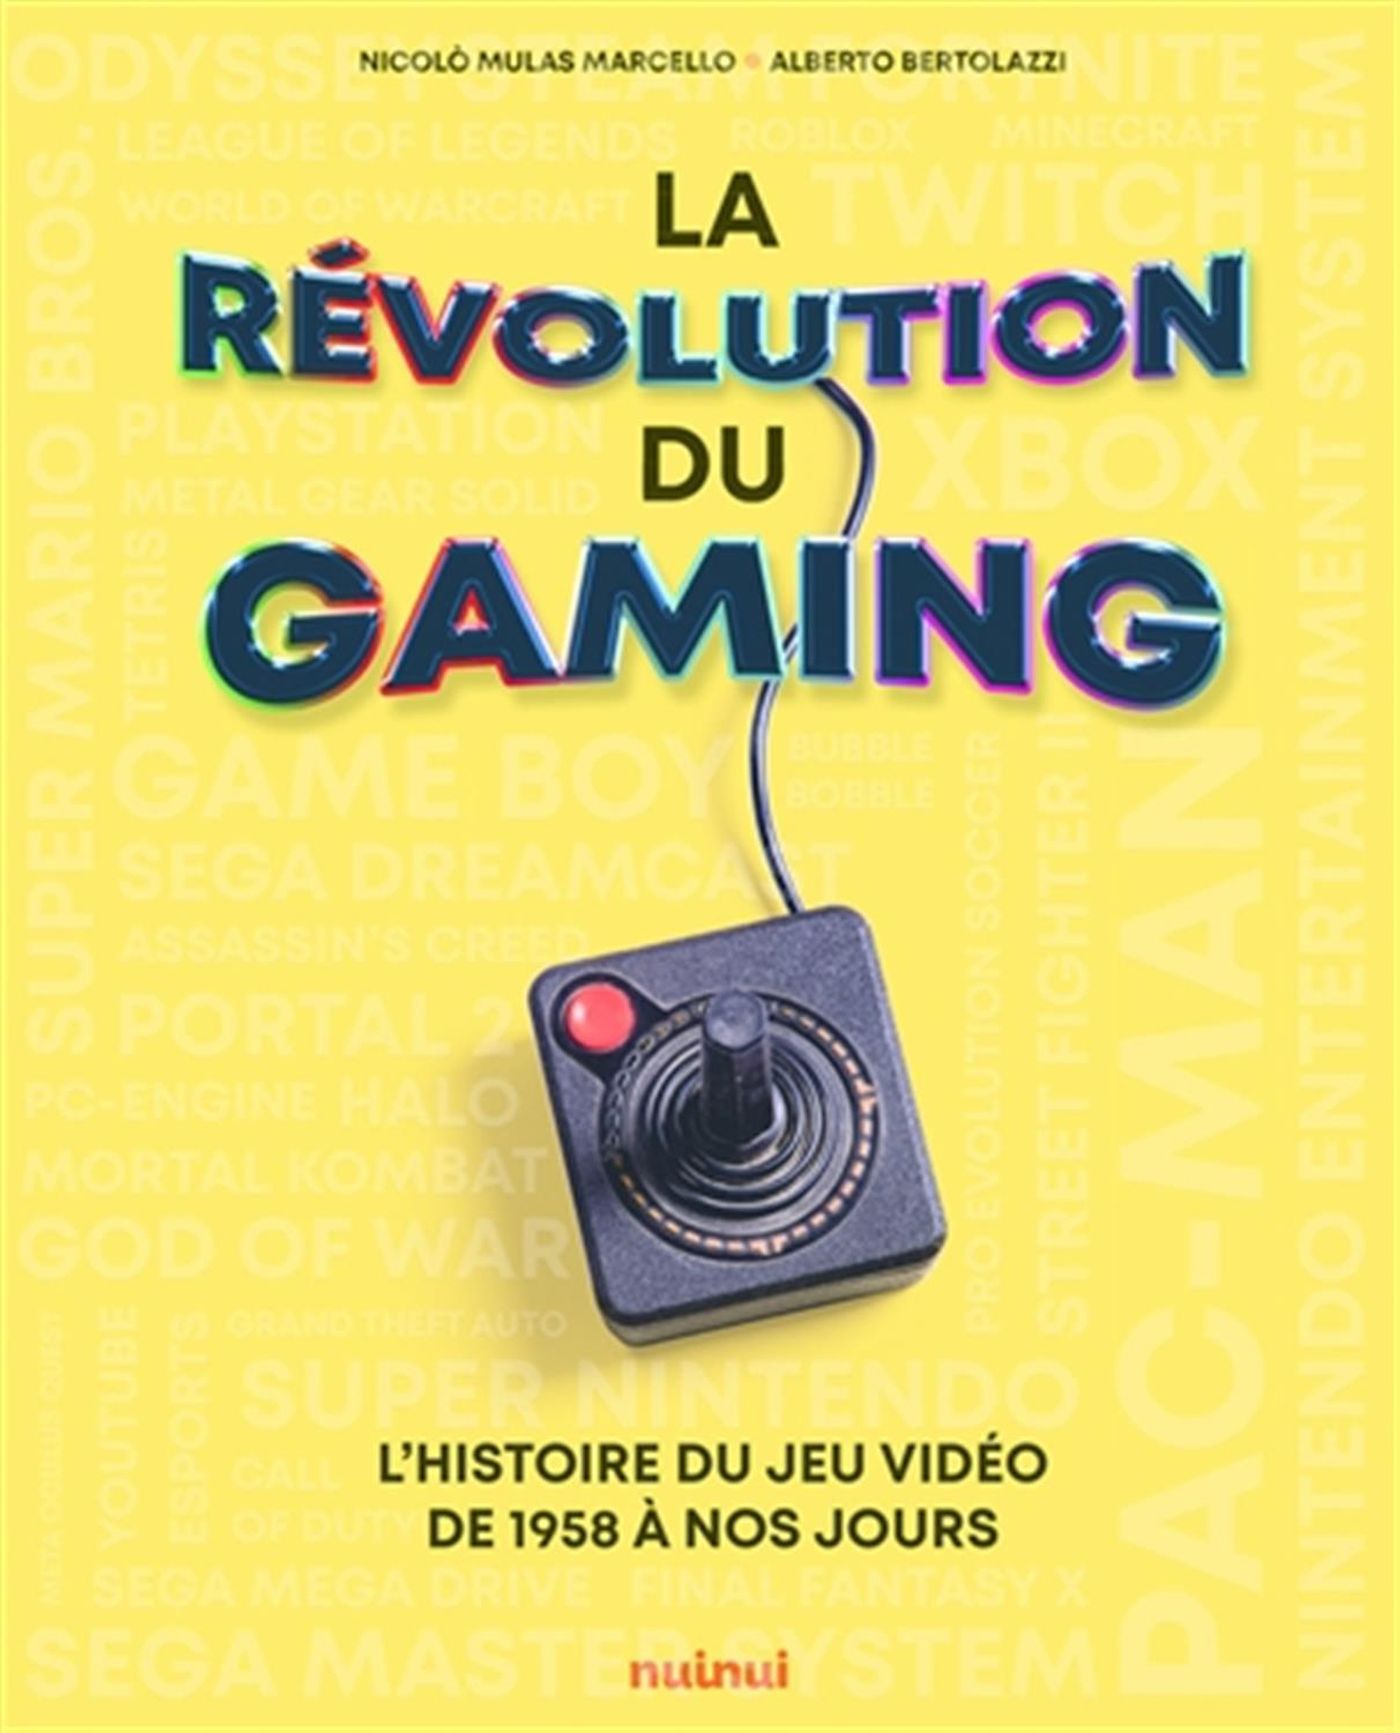 Jeux video revolution